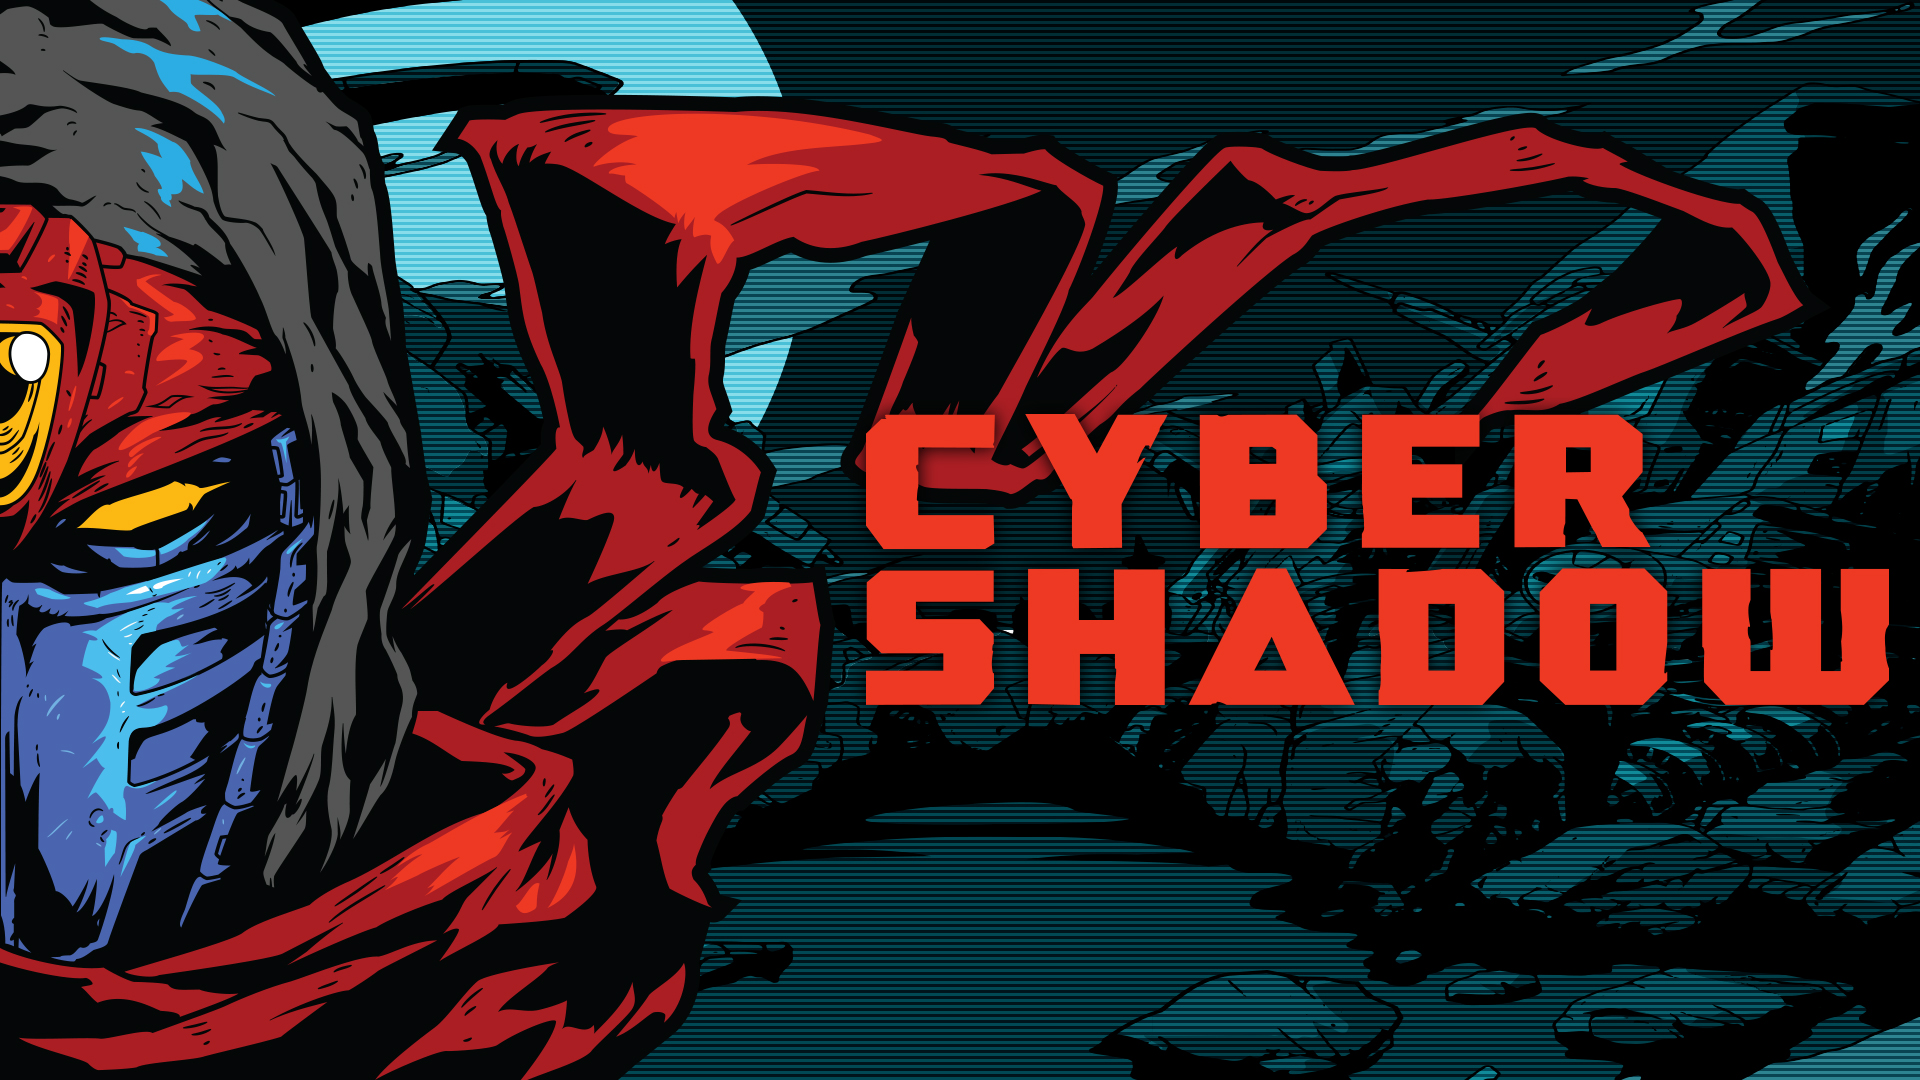 The Cyber Shadow logo